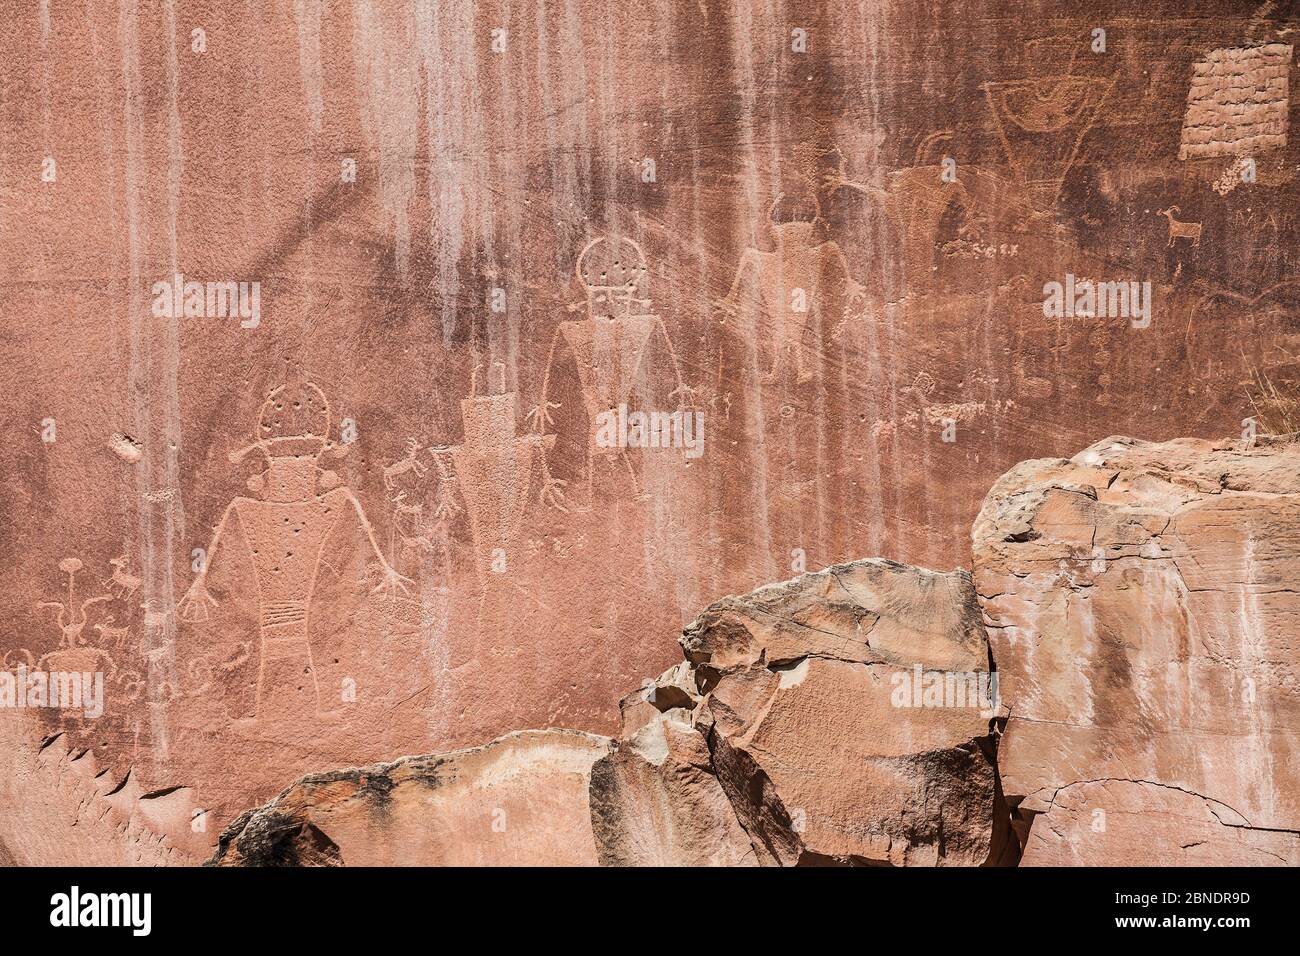 Capitol Reef Petroglyphs, Capitol Reef National Park, Utah, United States  Stock Photo - Alamy